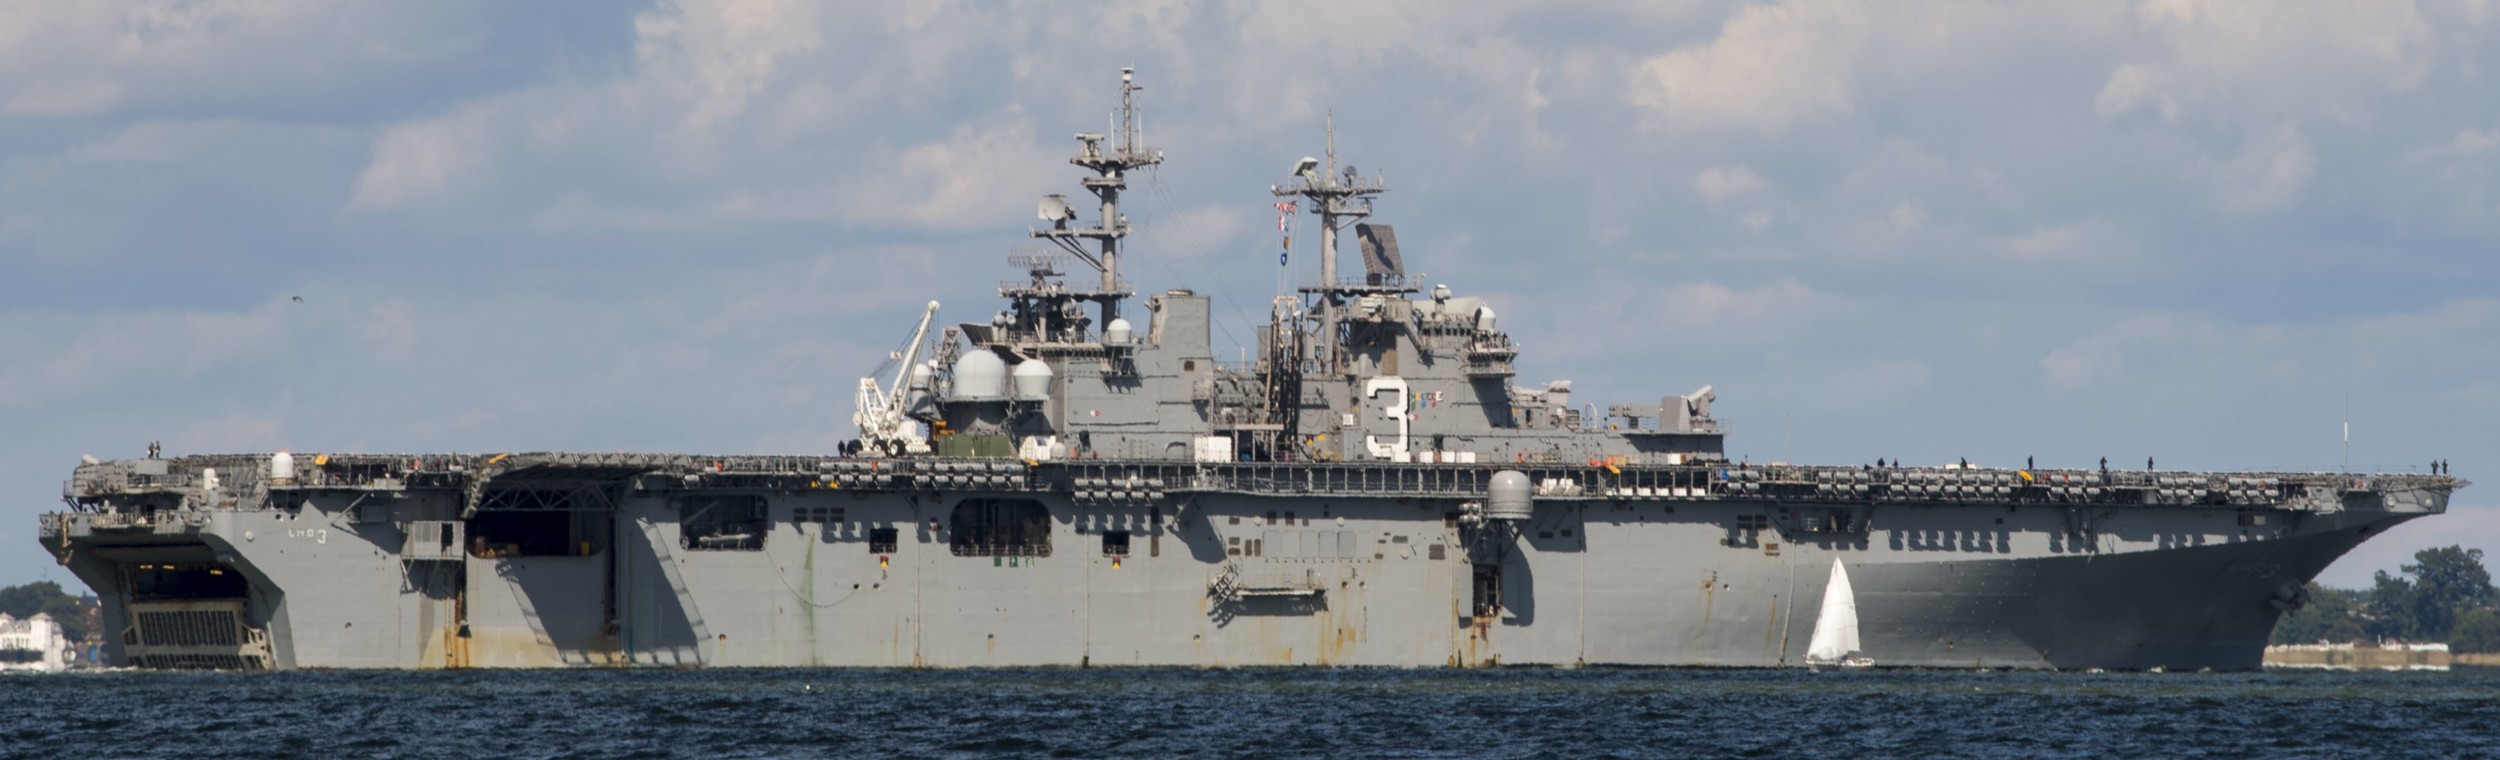 lhd-3 uss kearsarge wasp class amphibious assault ship landing dock us navy marines departing naval station norfolk virginia 190